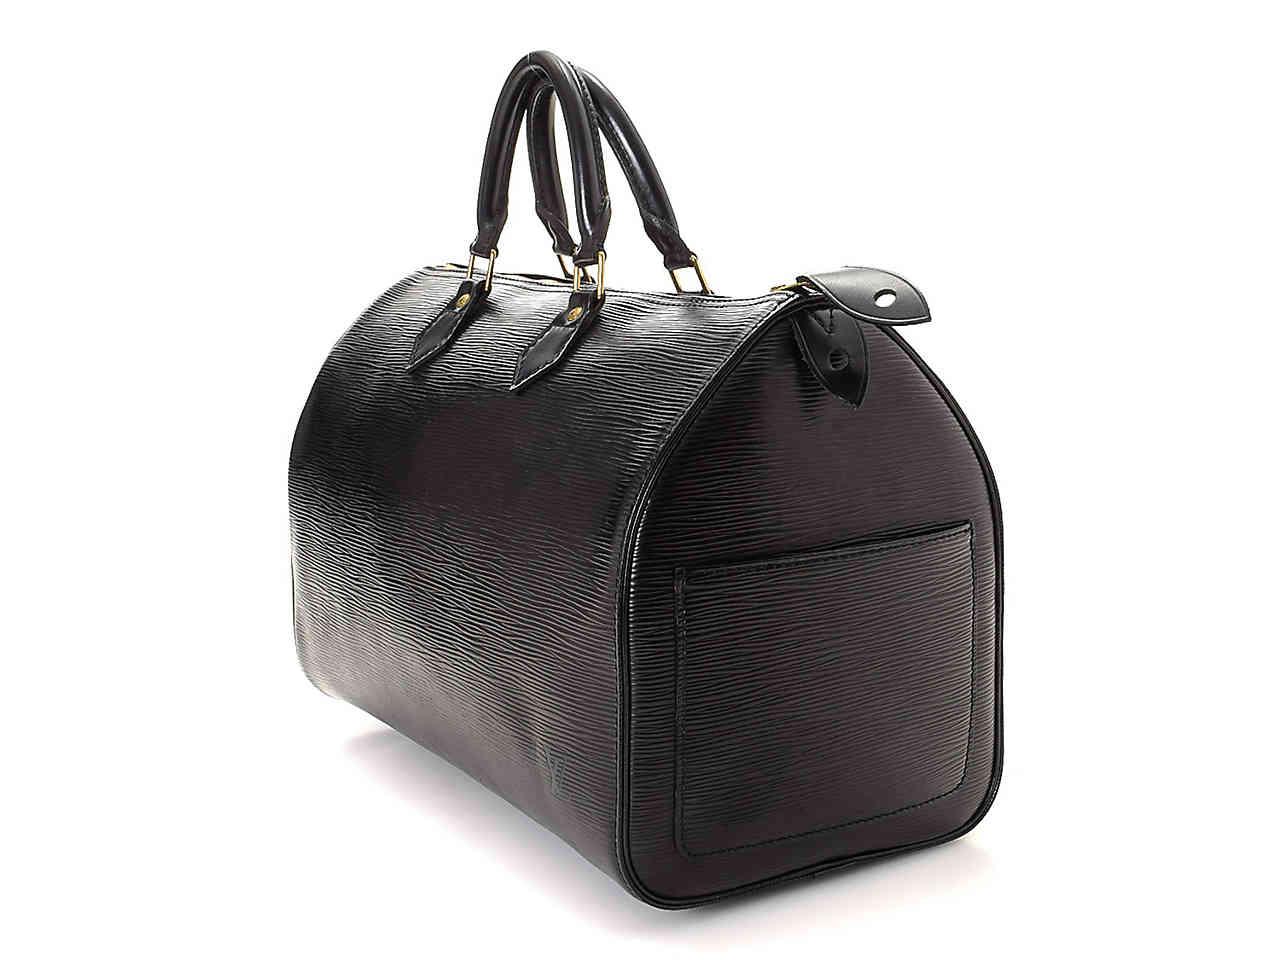 Lyst - Louis Vuitton Speedy 35 Leather Satchel in Black for Men